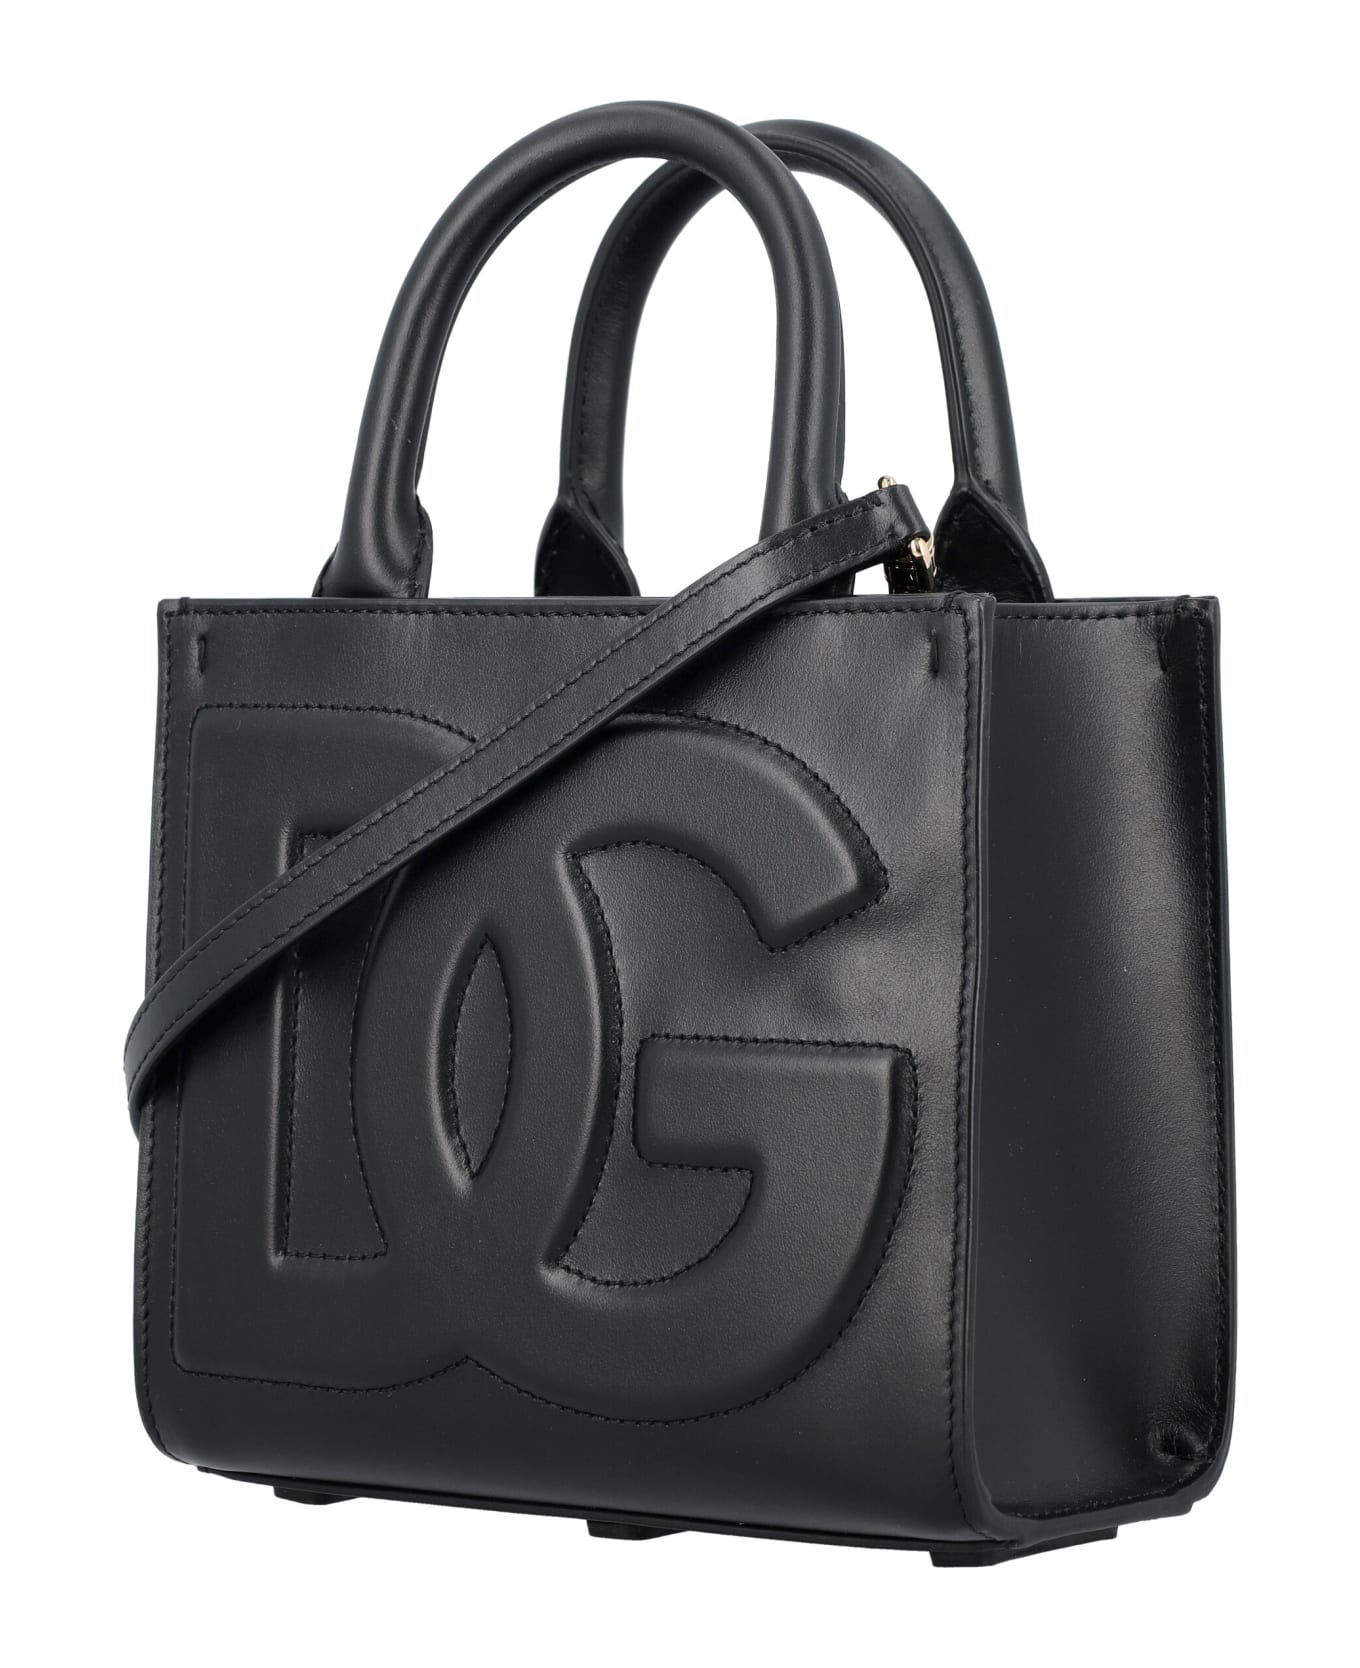 Dolce & Gabbana Mini Tote Bag Dg - NERO